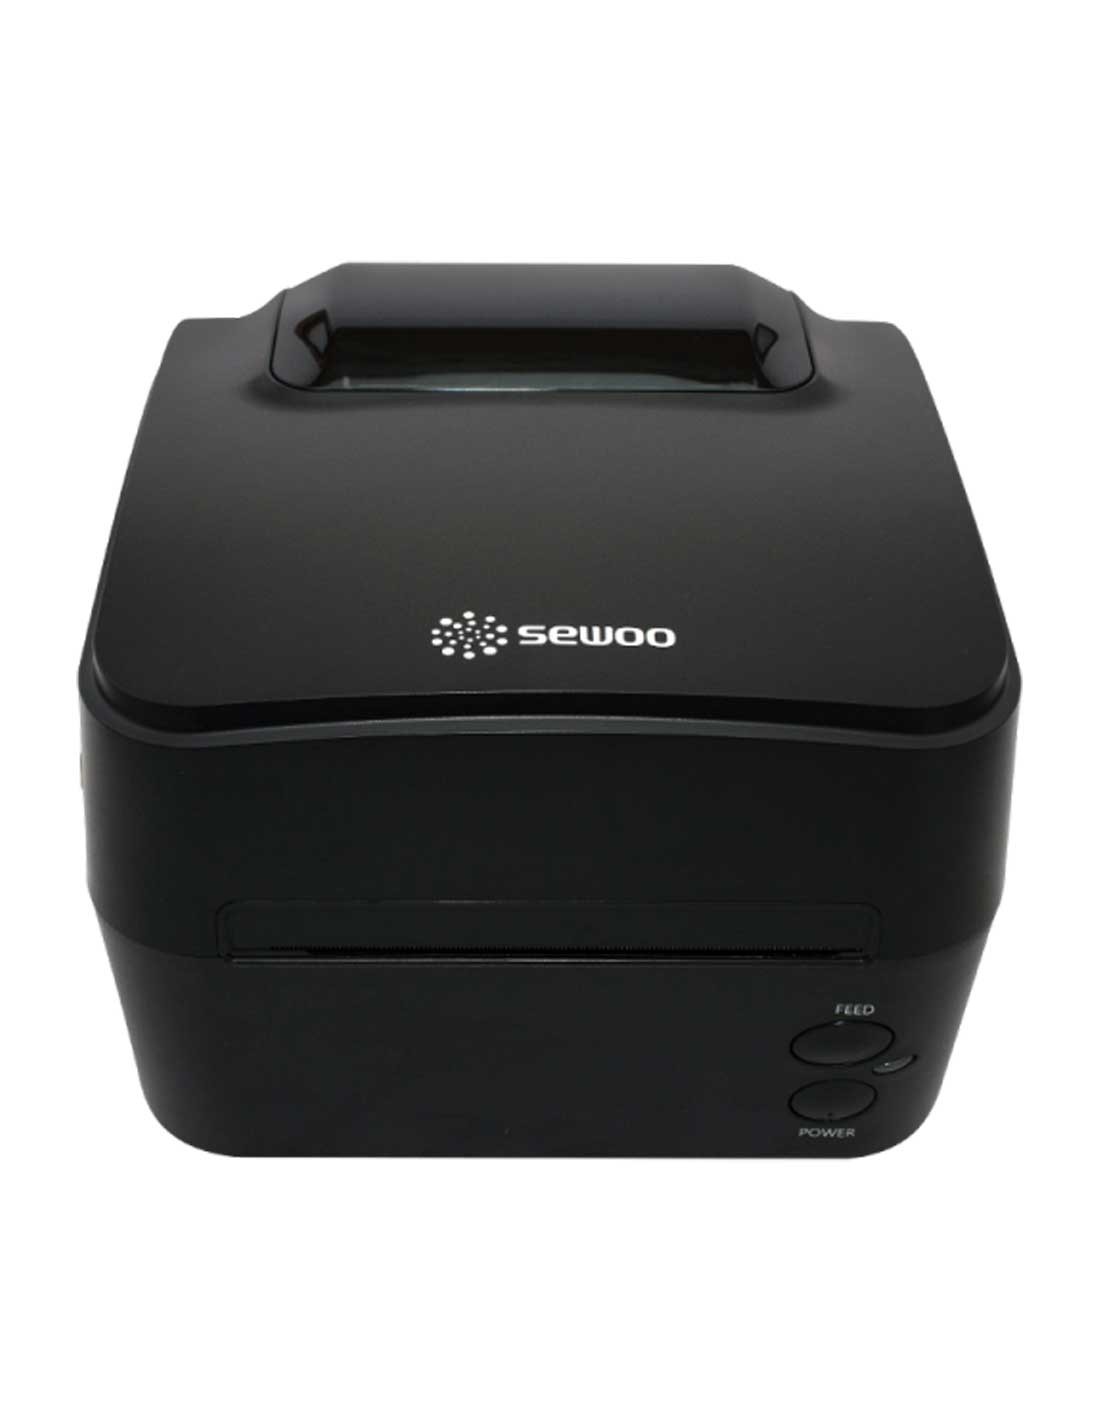 Sewoo LK-B24 Barcode Printer at a Cheap Price in Dubai